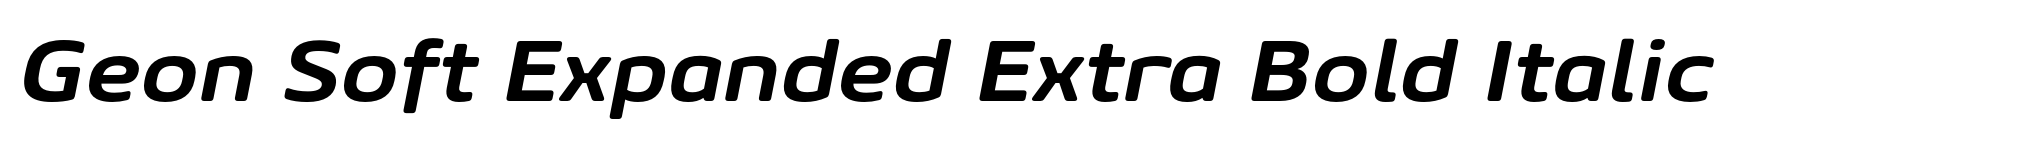 Geon Soft Expanded Extra Bold Italic image